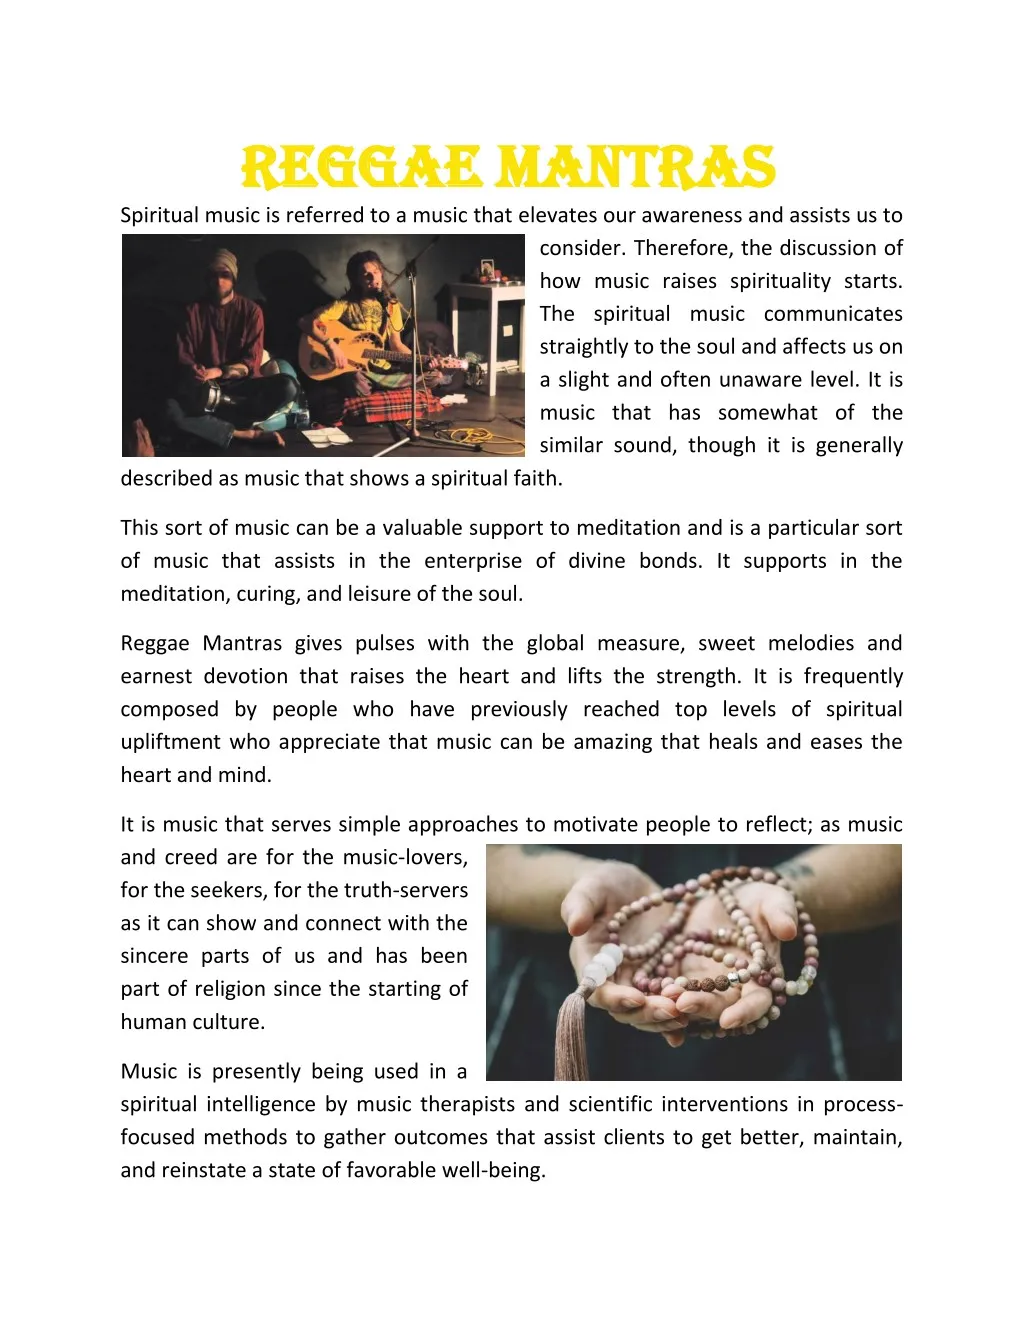 reggae reggae mantras spiritual music is referred